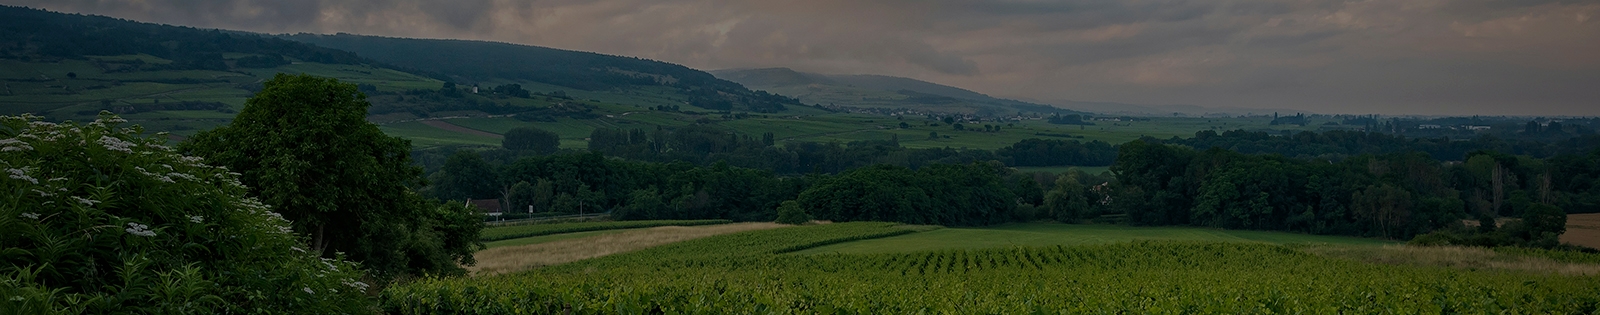 burgundy field